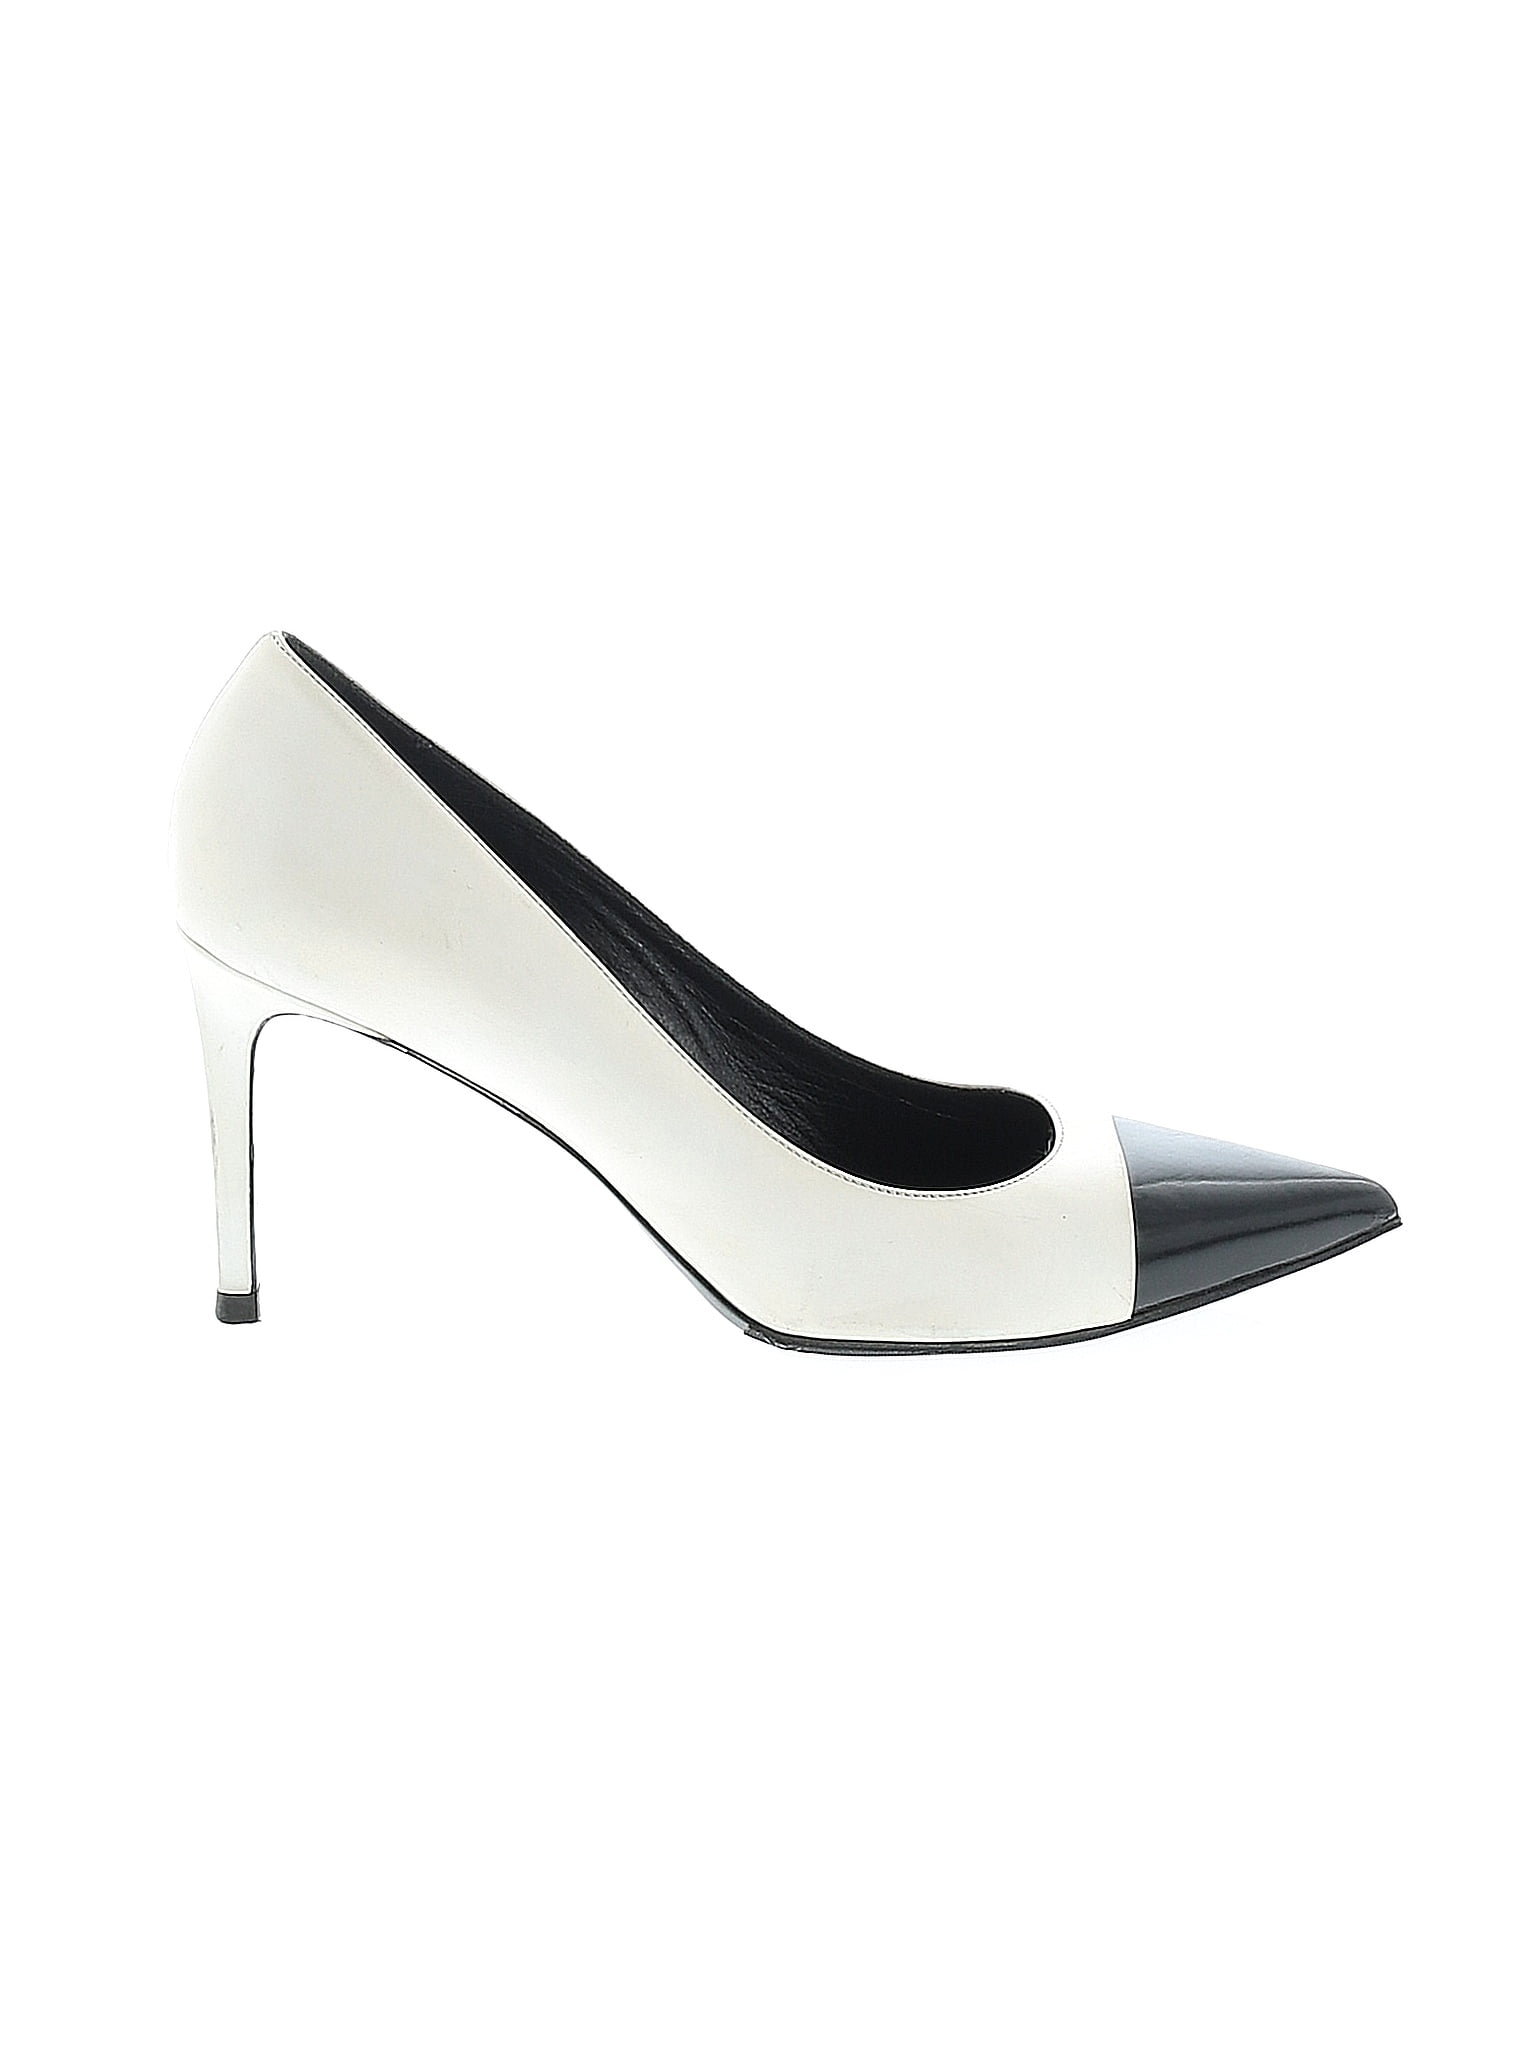 Saint Laurent 100% Leather White Heels Size 40 (EU) - 81% off | thredUP